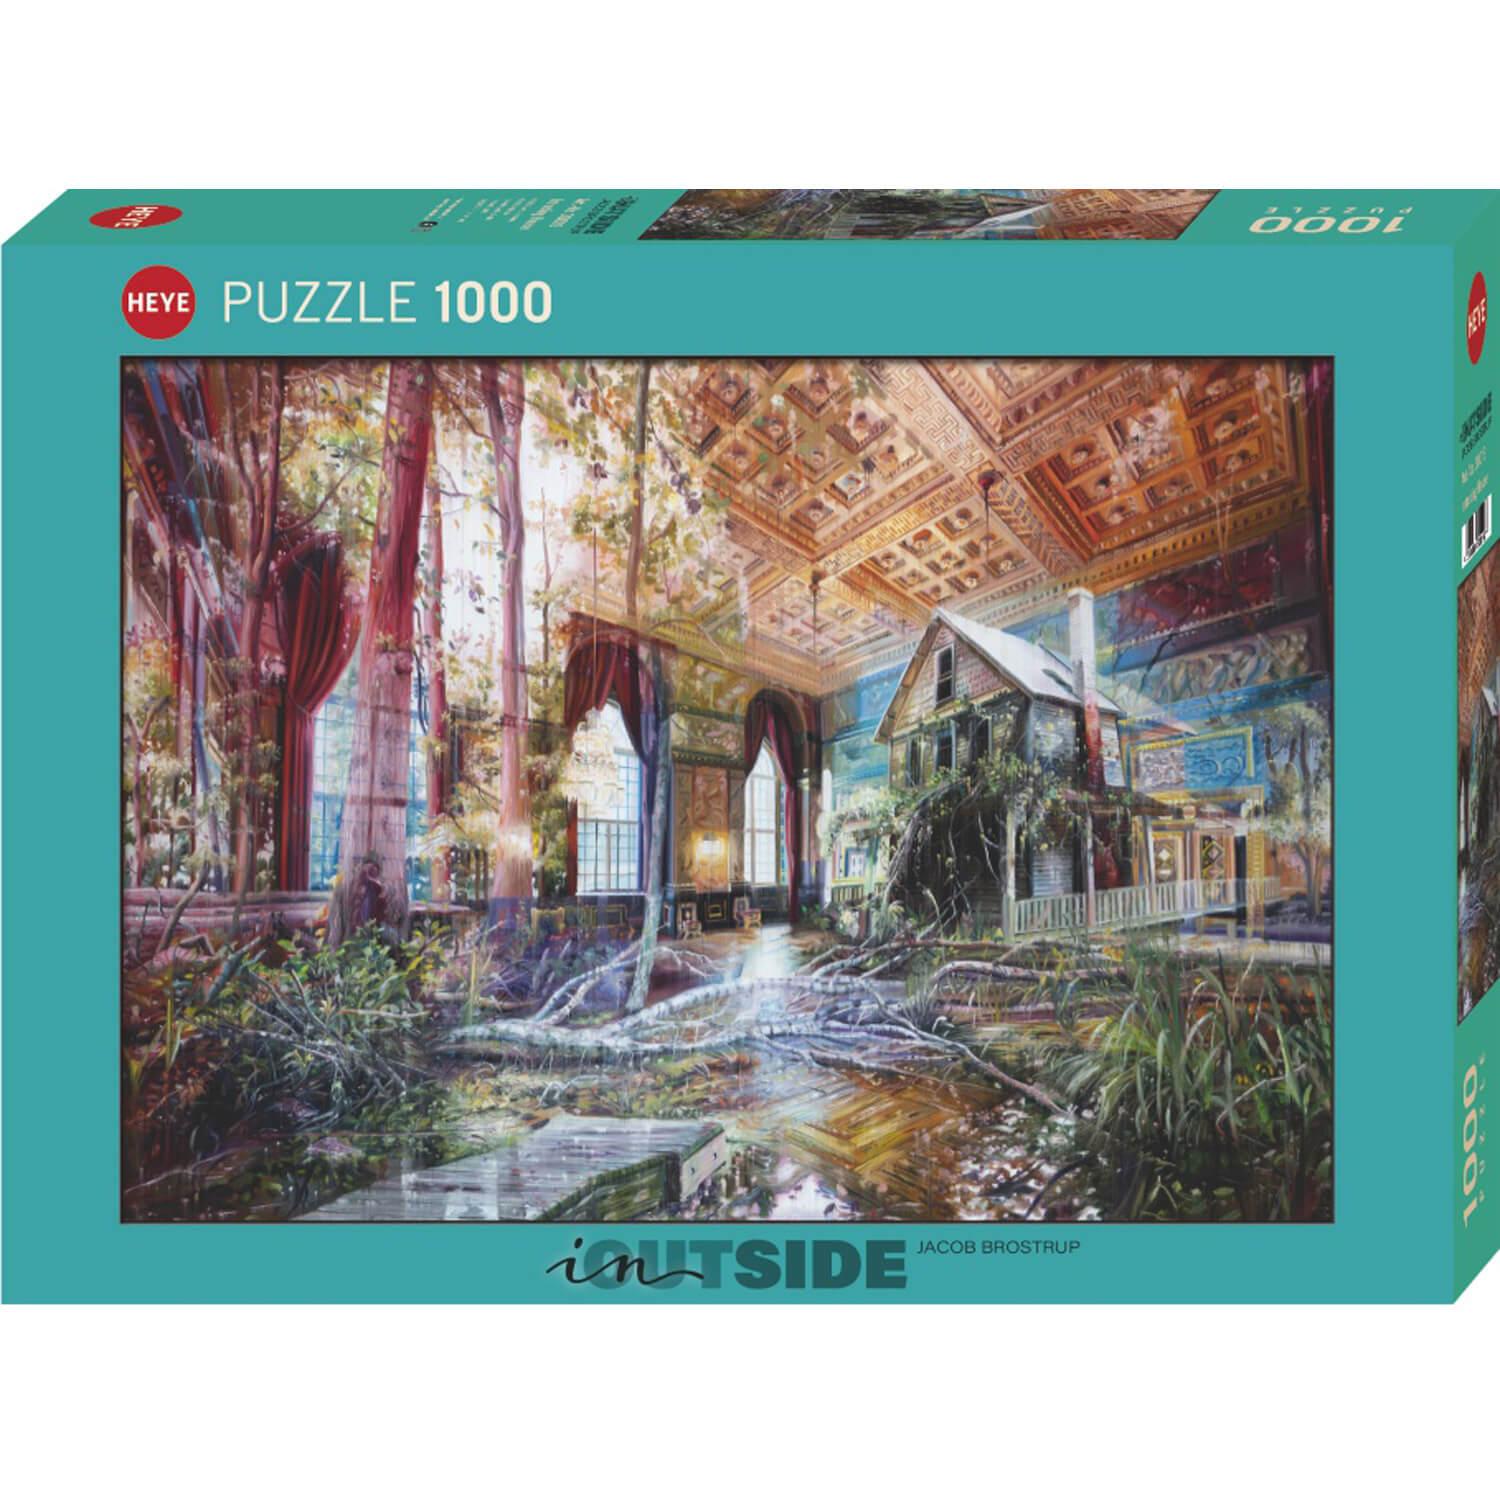 Puzzle 1000 pièces : In Outside : Maison